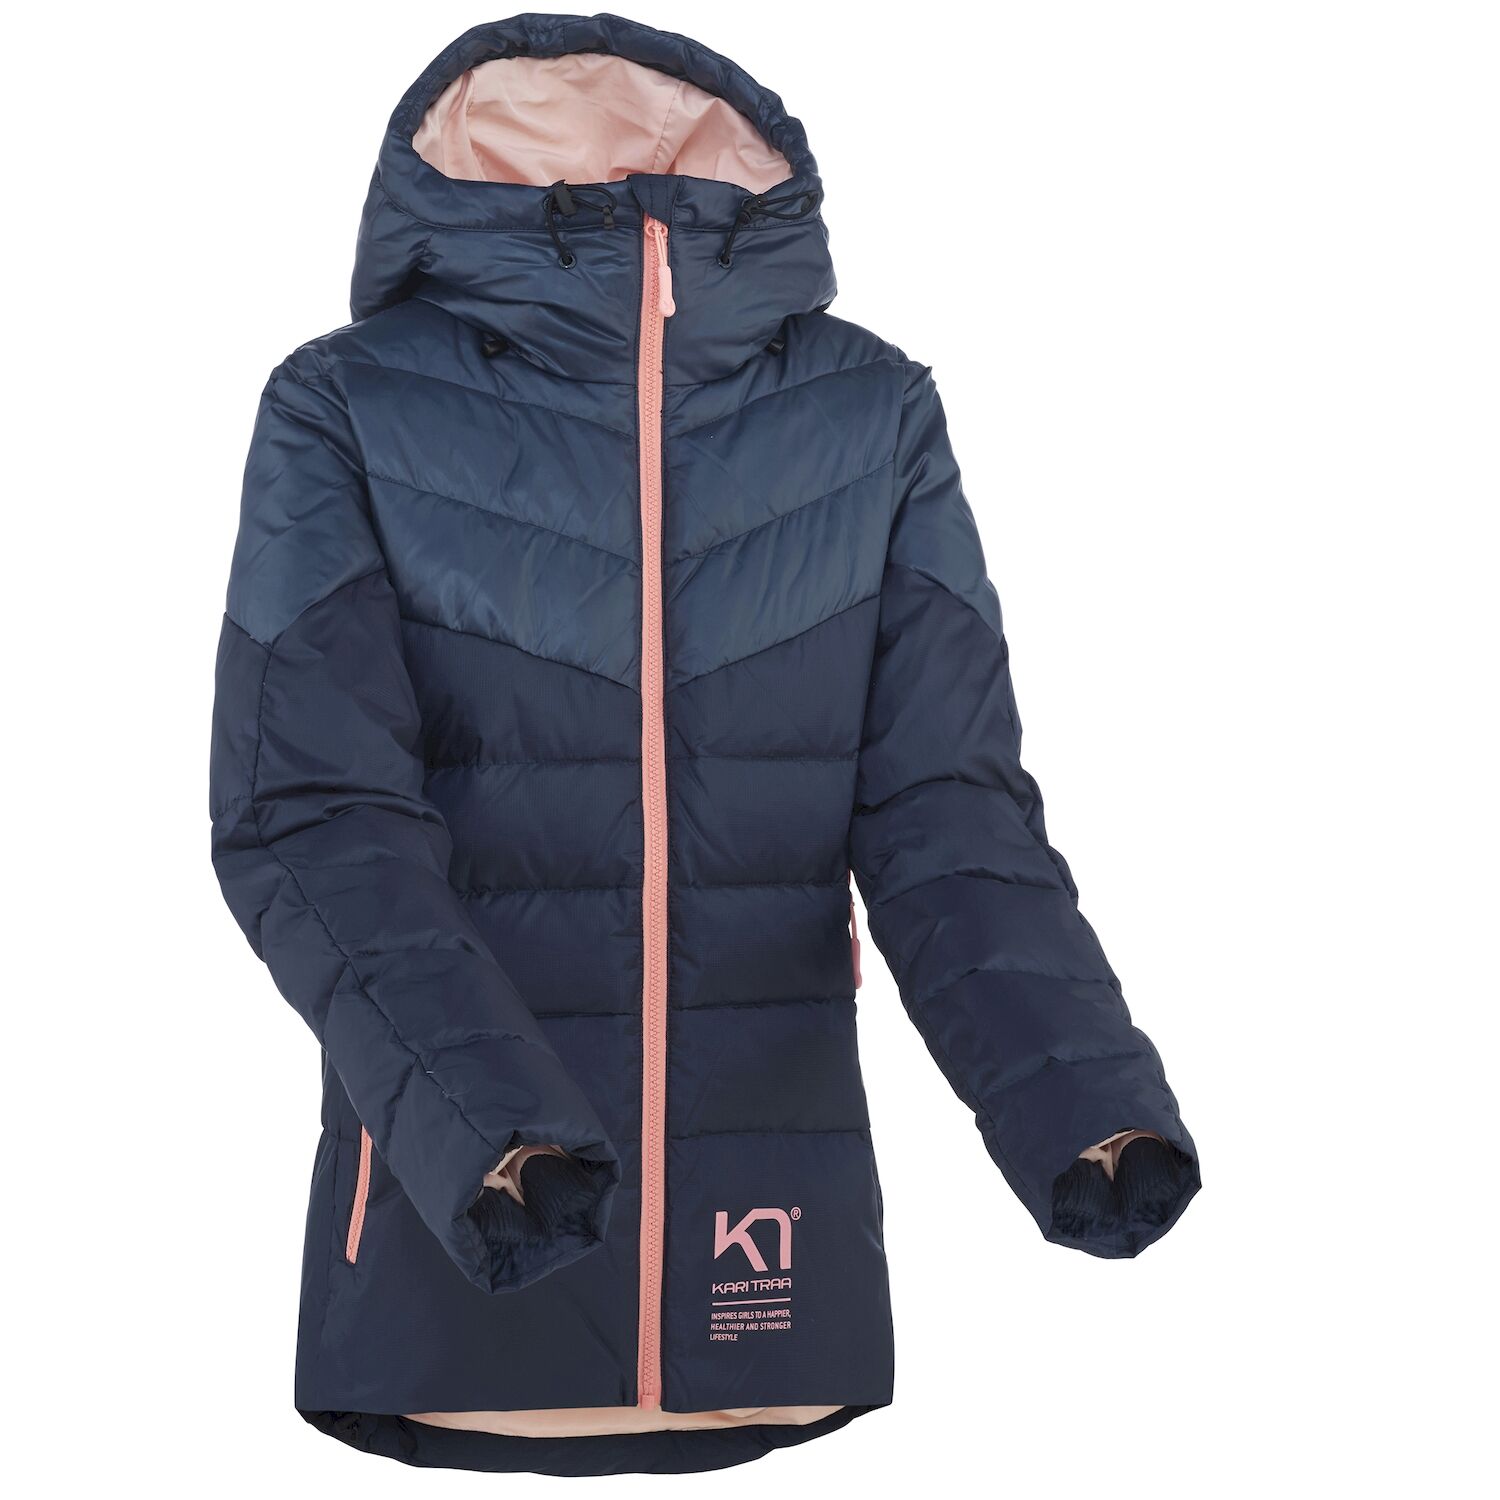 Kari Traa Tirill Down Jacket - Hybrid jacket - Women's